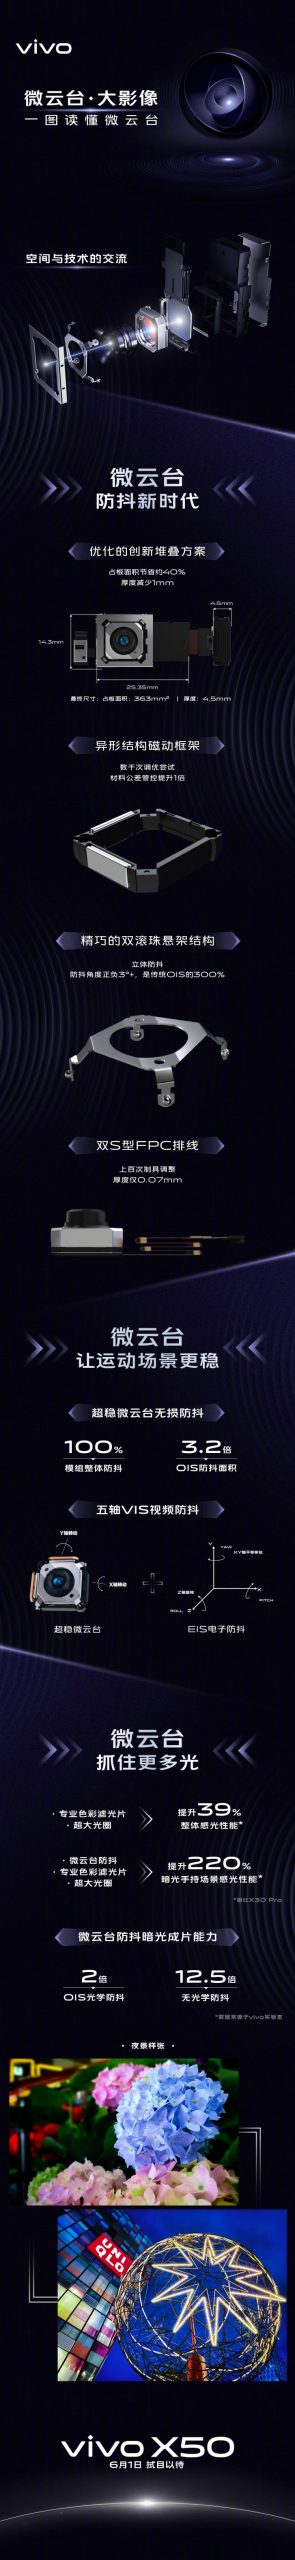 Vivo X50 Pro camera features